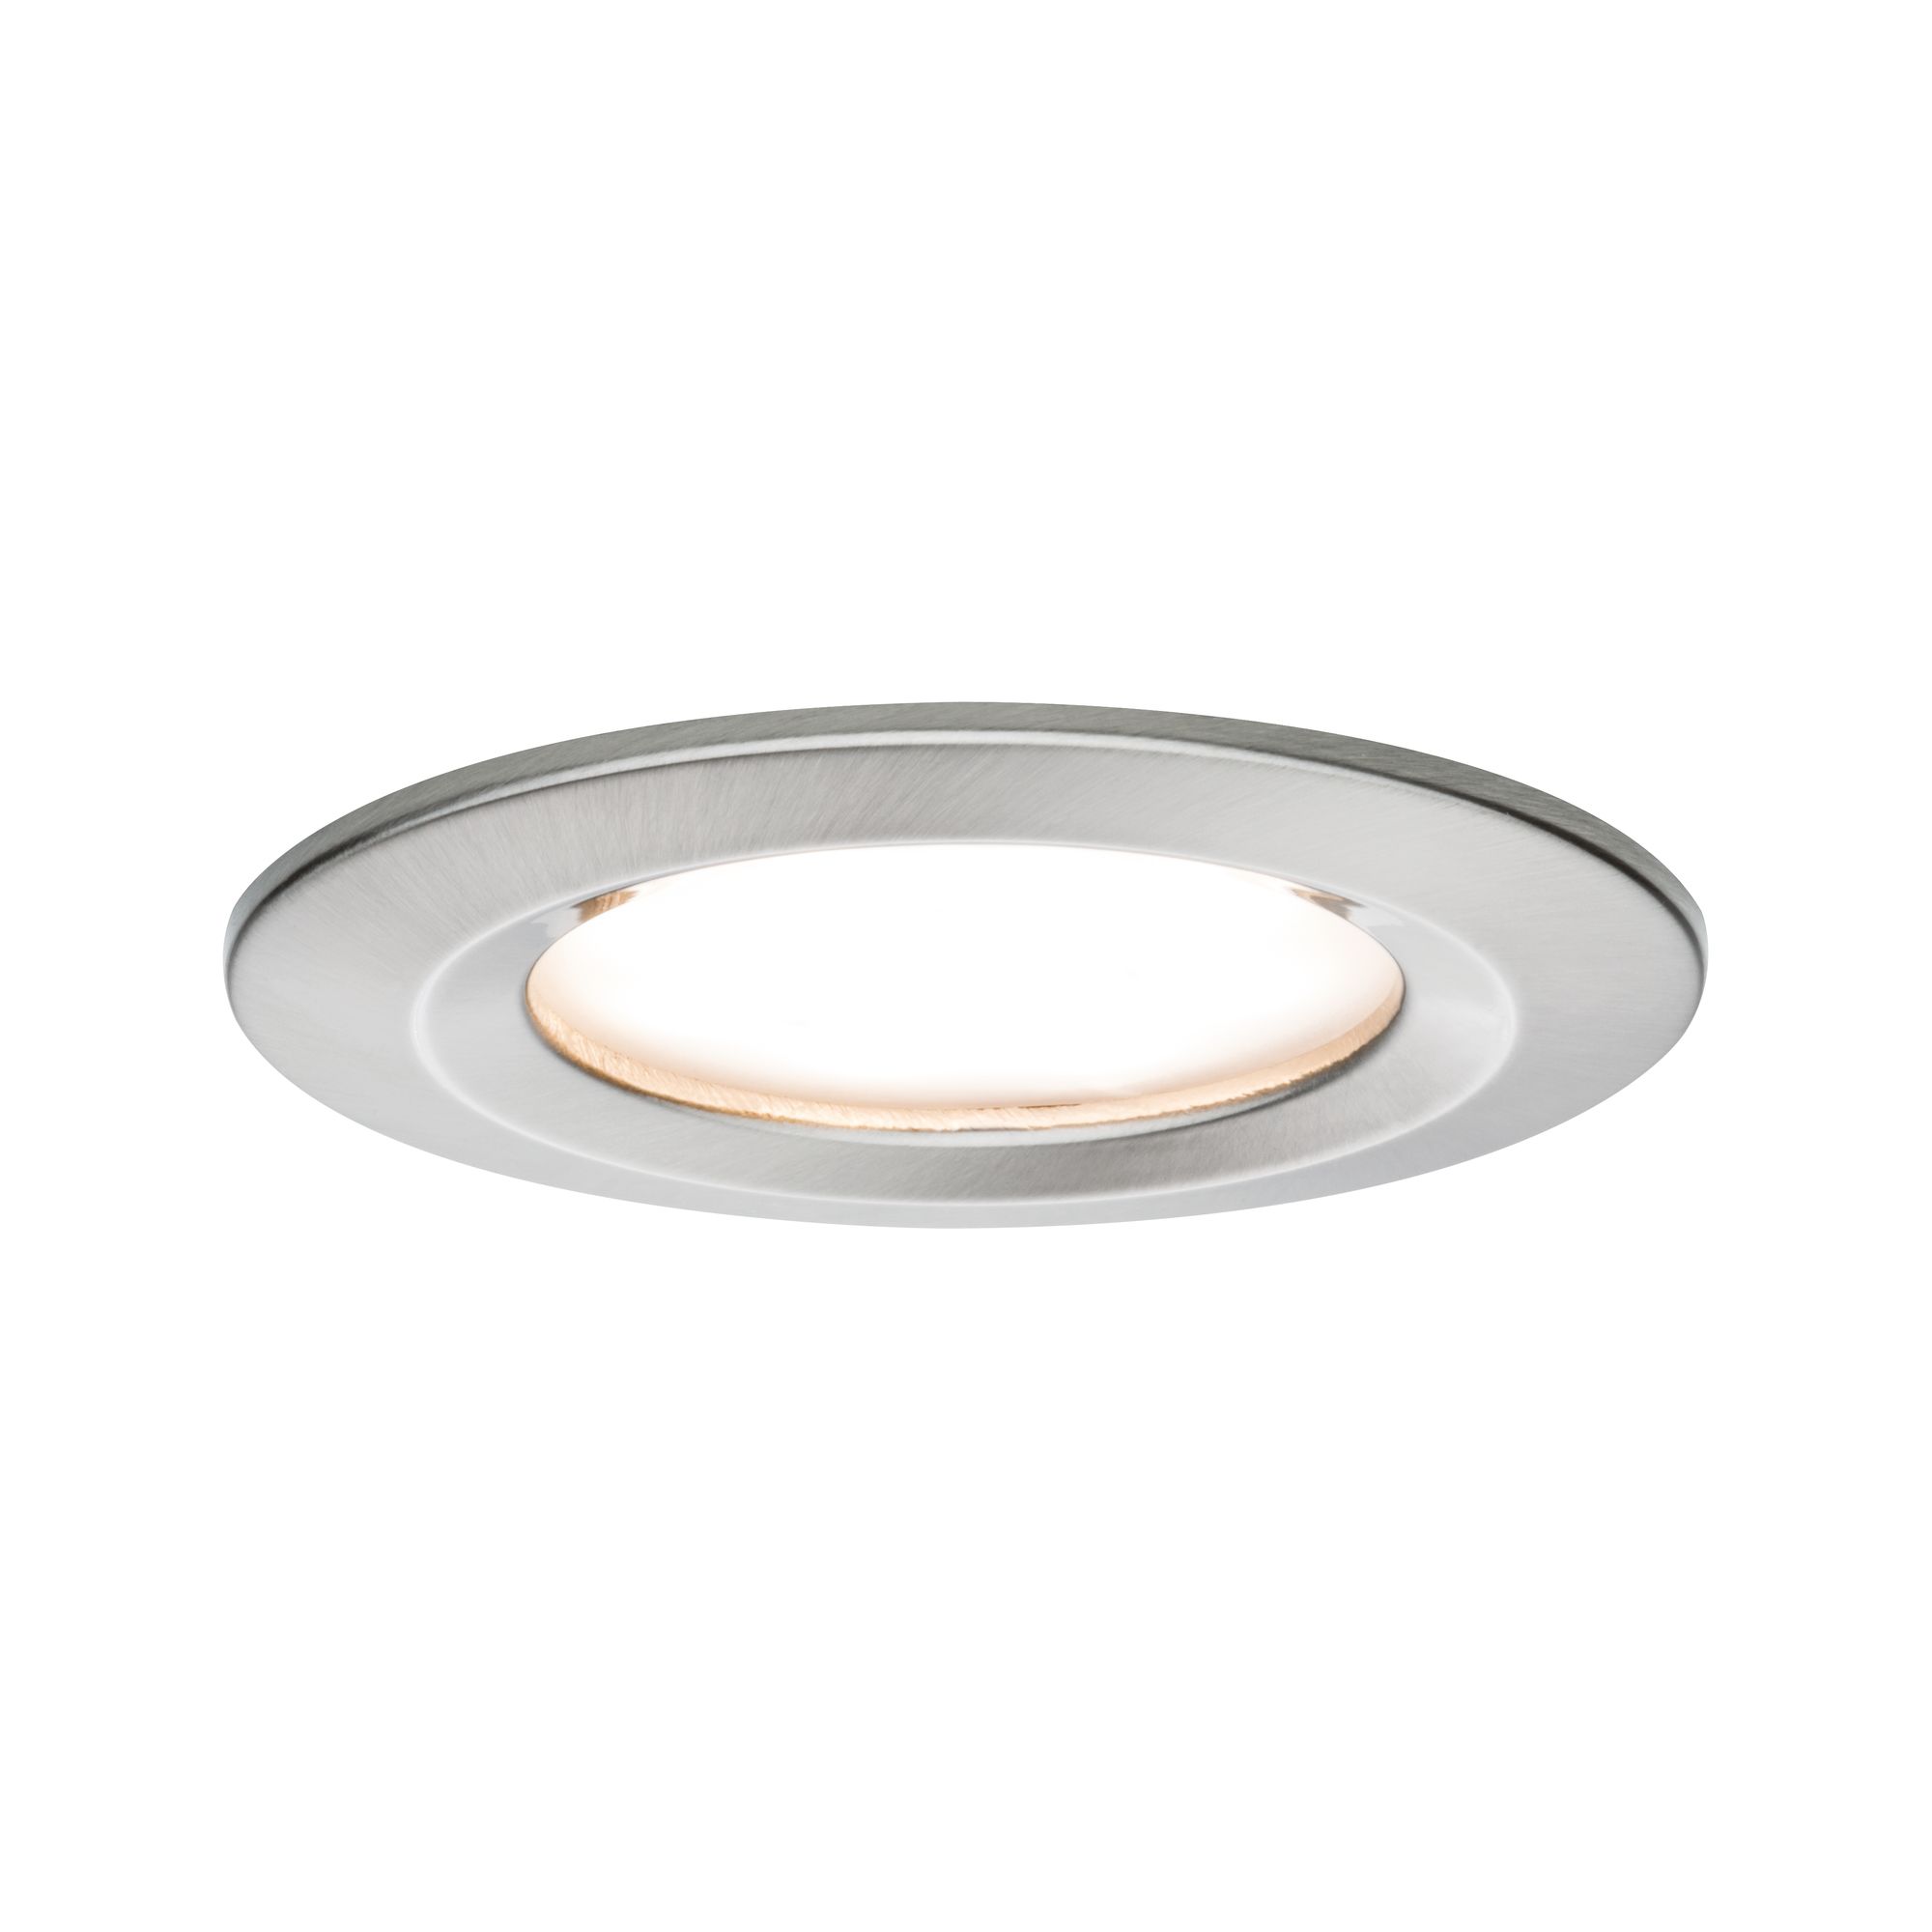 PAULMANN - Vestavné svítidlo LED Nova kruhové 1x6,5W kov kartáčovaný nevýklopné, P 93457